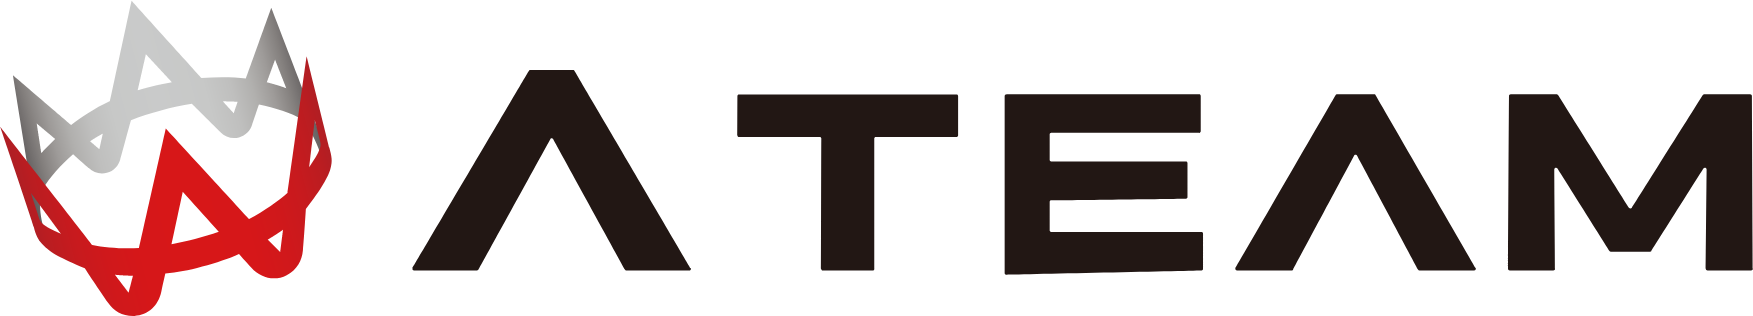 Ateam logo large (transparent PNG)